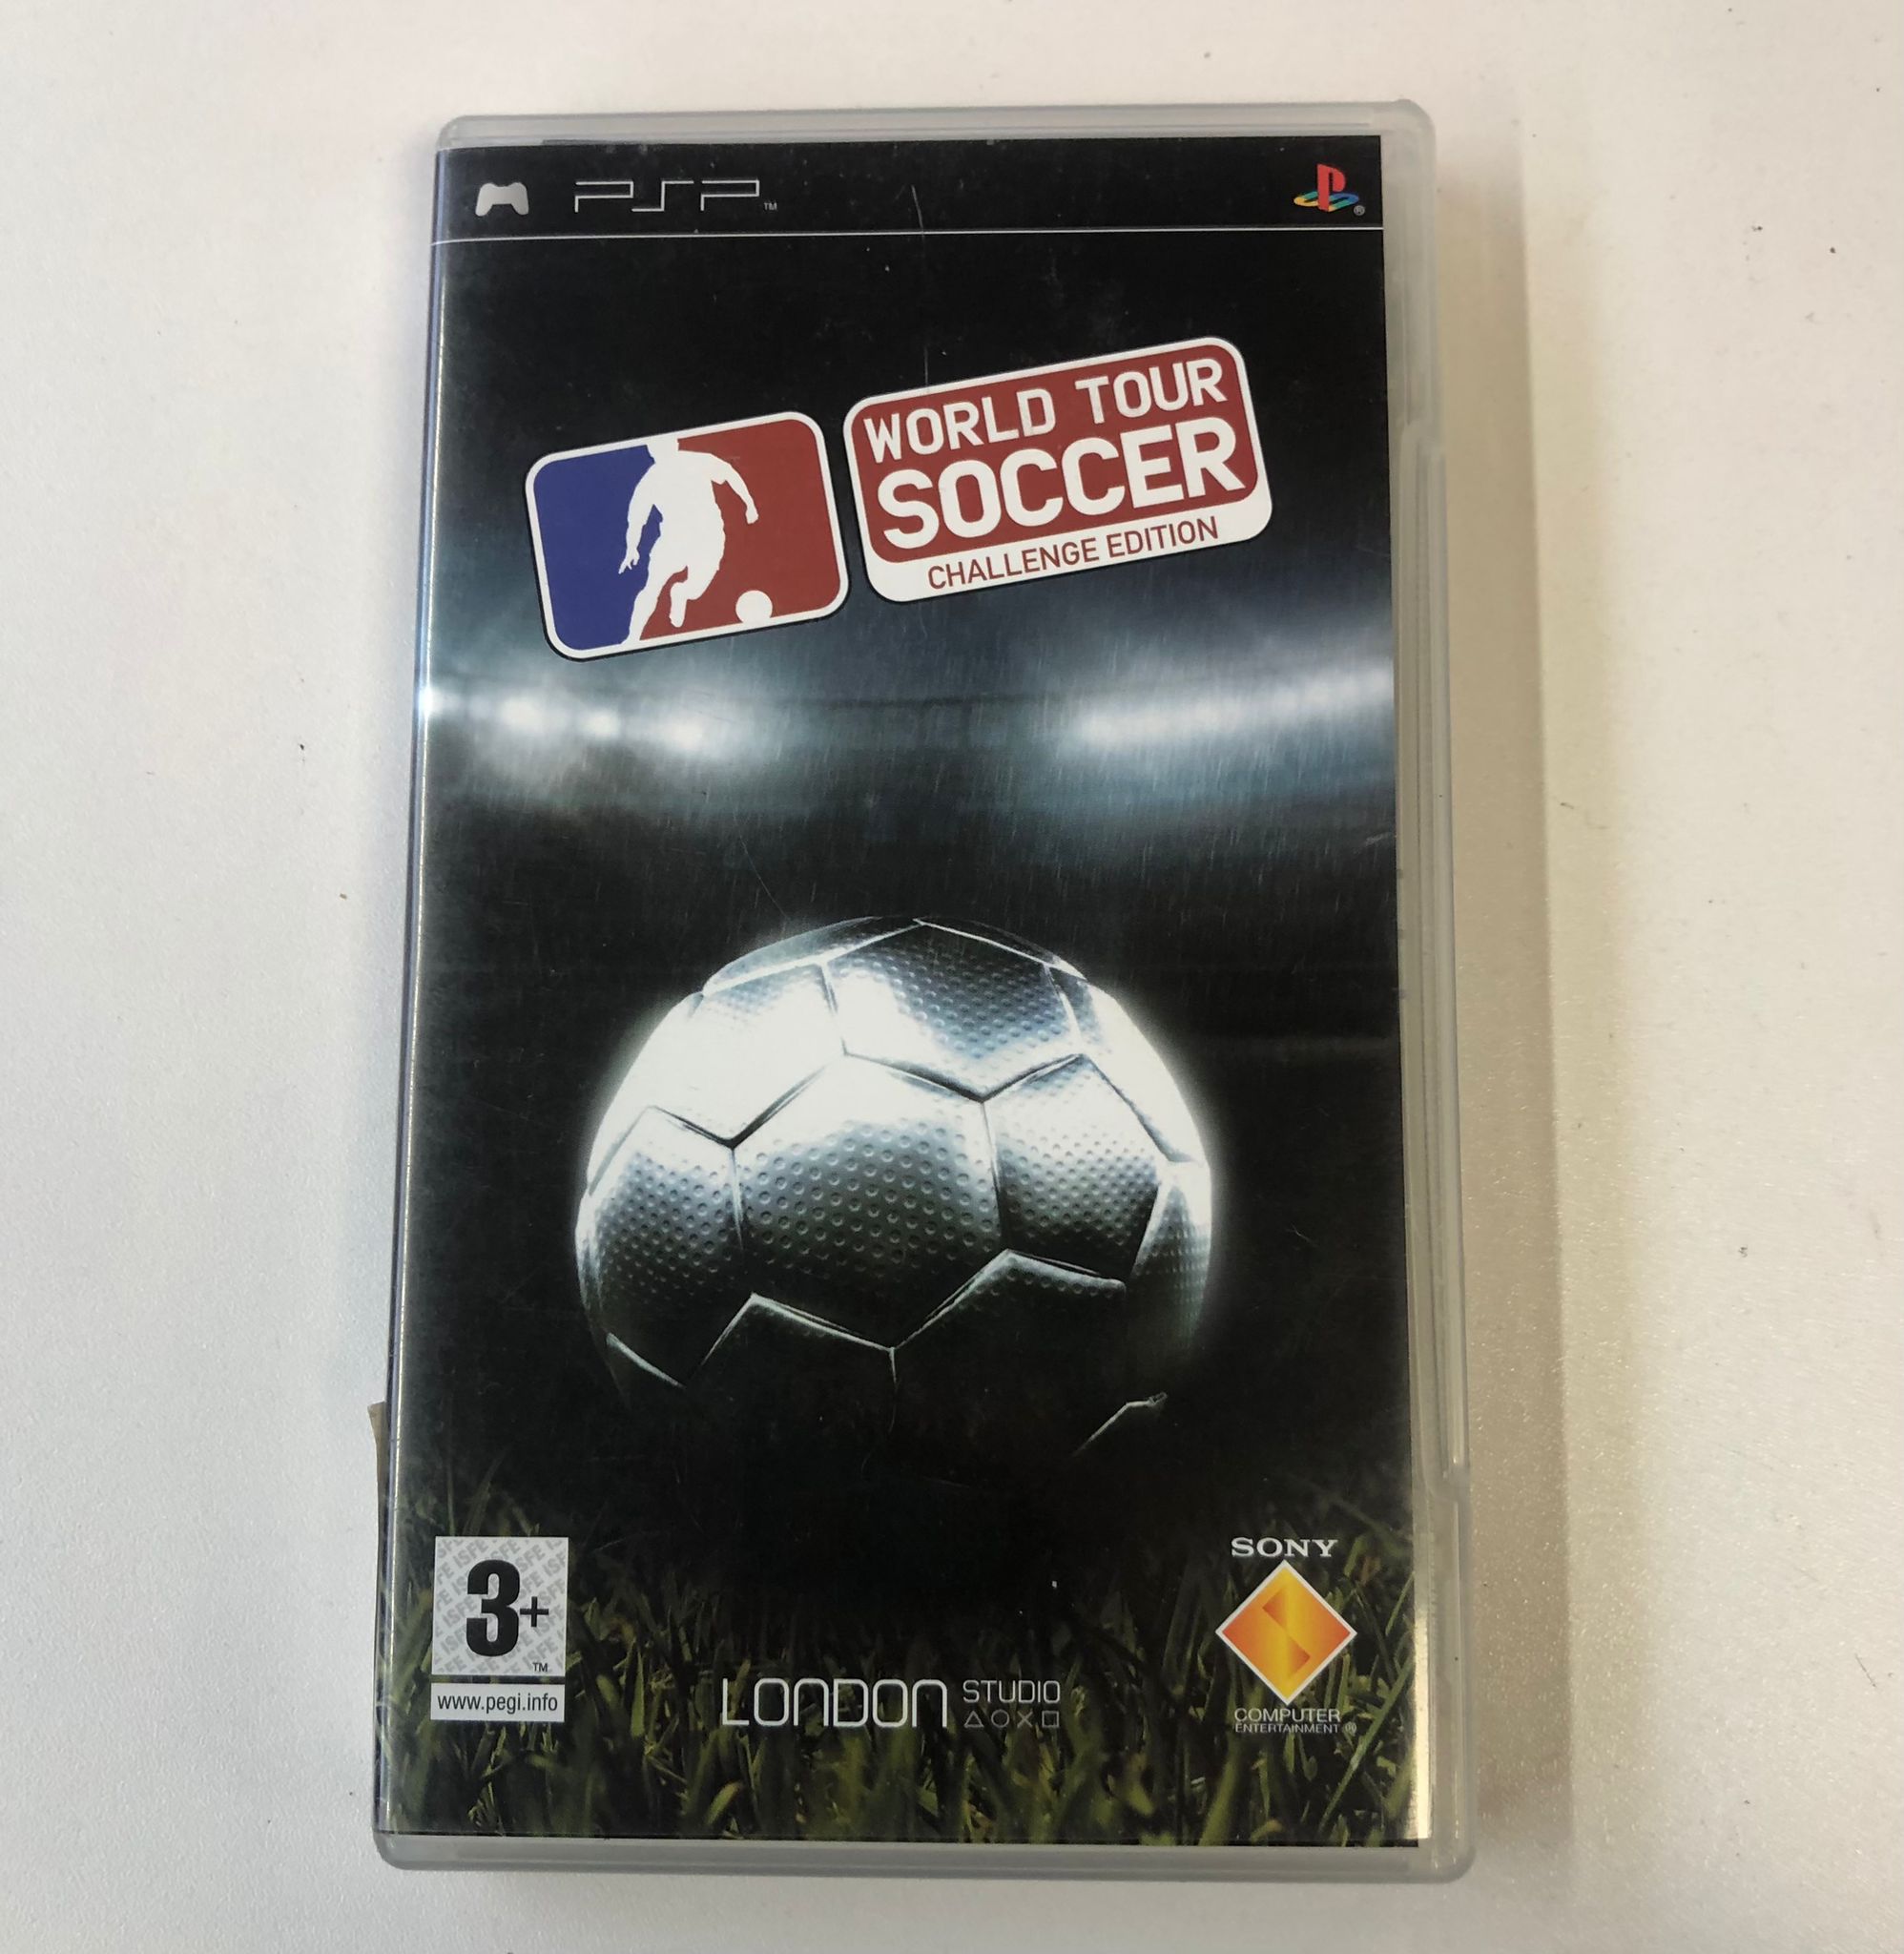 World Tour Soccer Challenge Edition - PSP